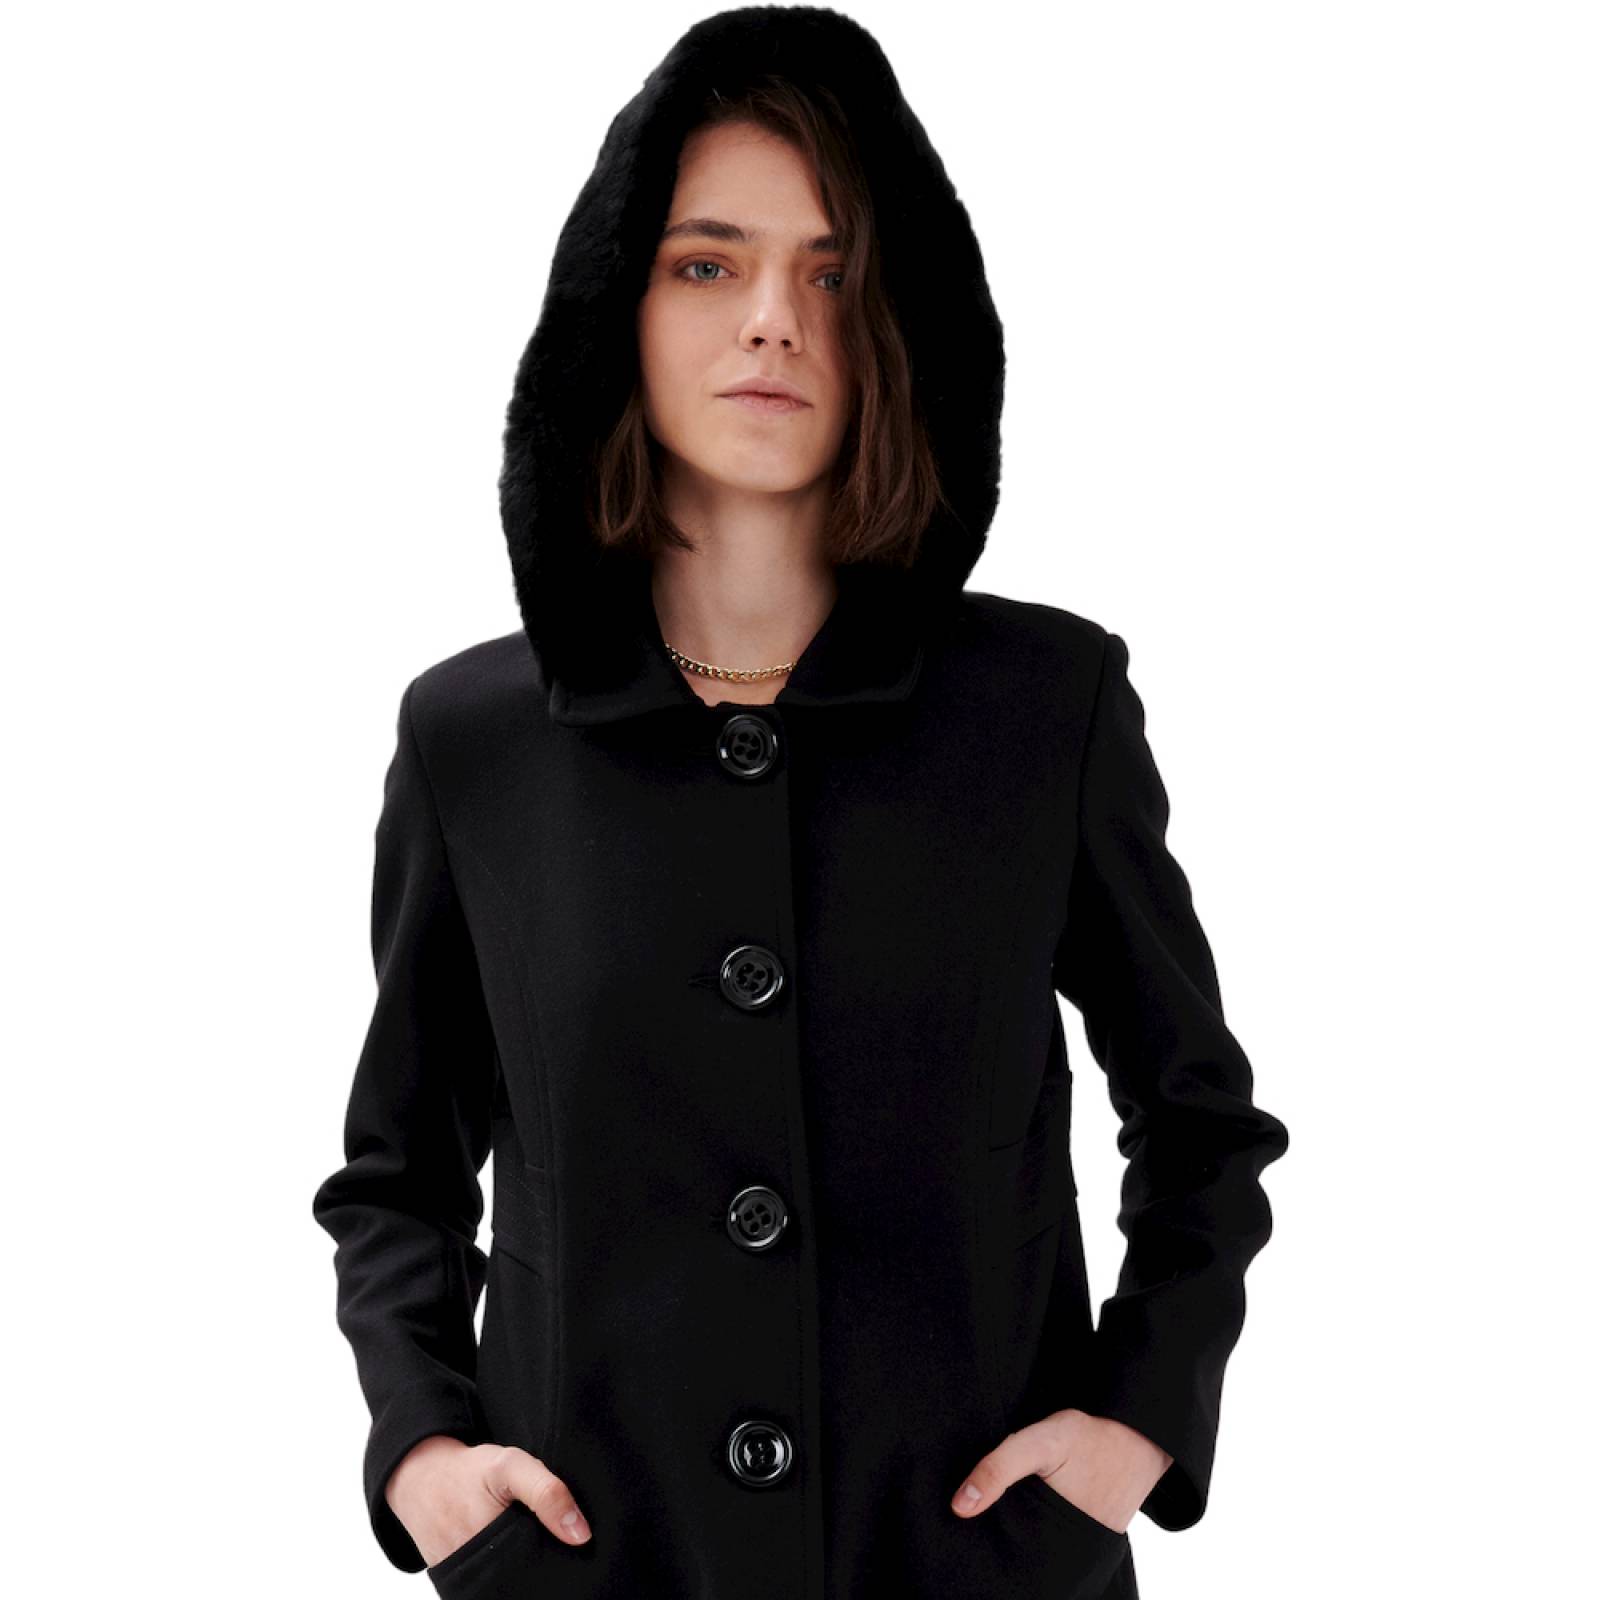 Blazer DN con capucha negro lana